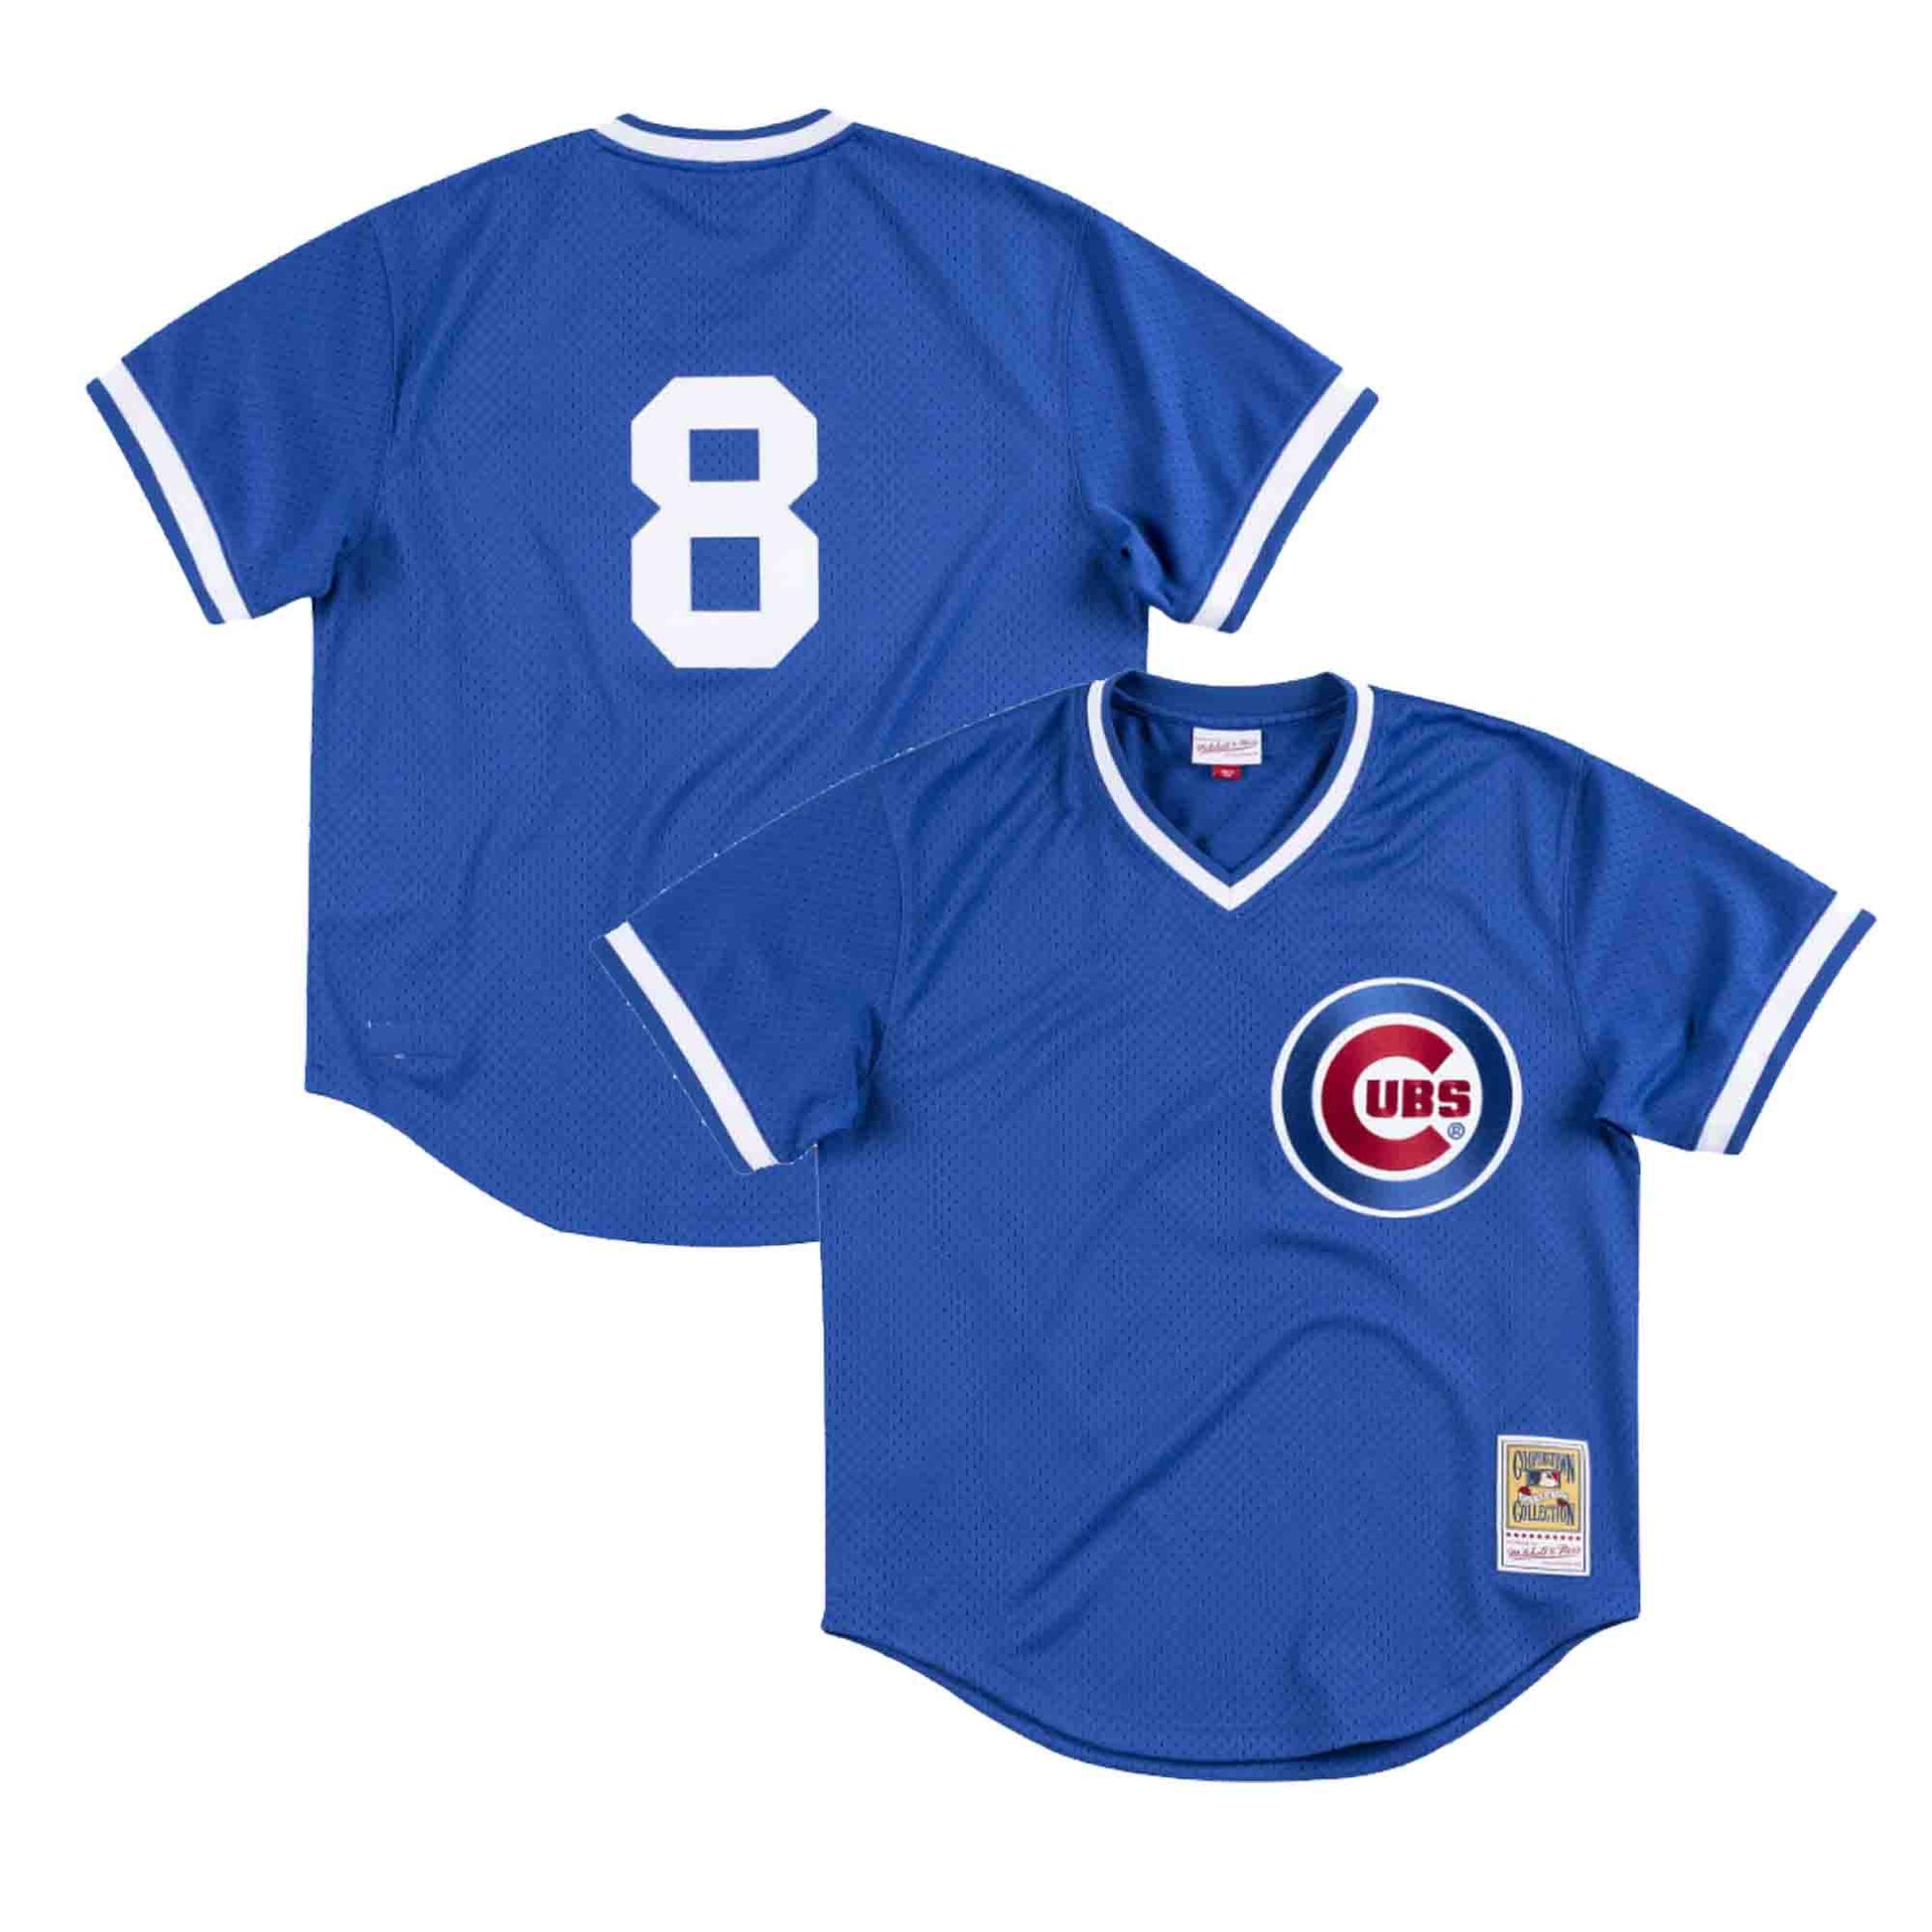 MLB Chicago Cubs Uniform Set